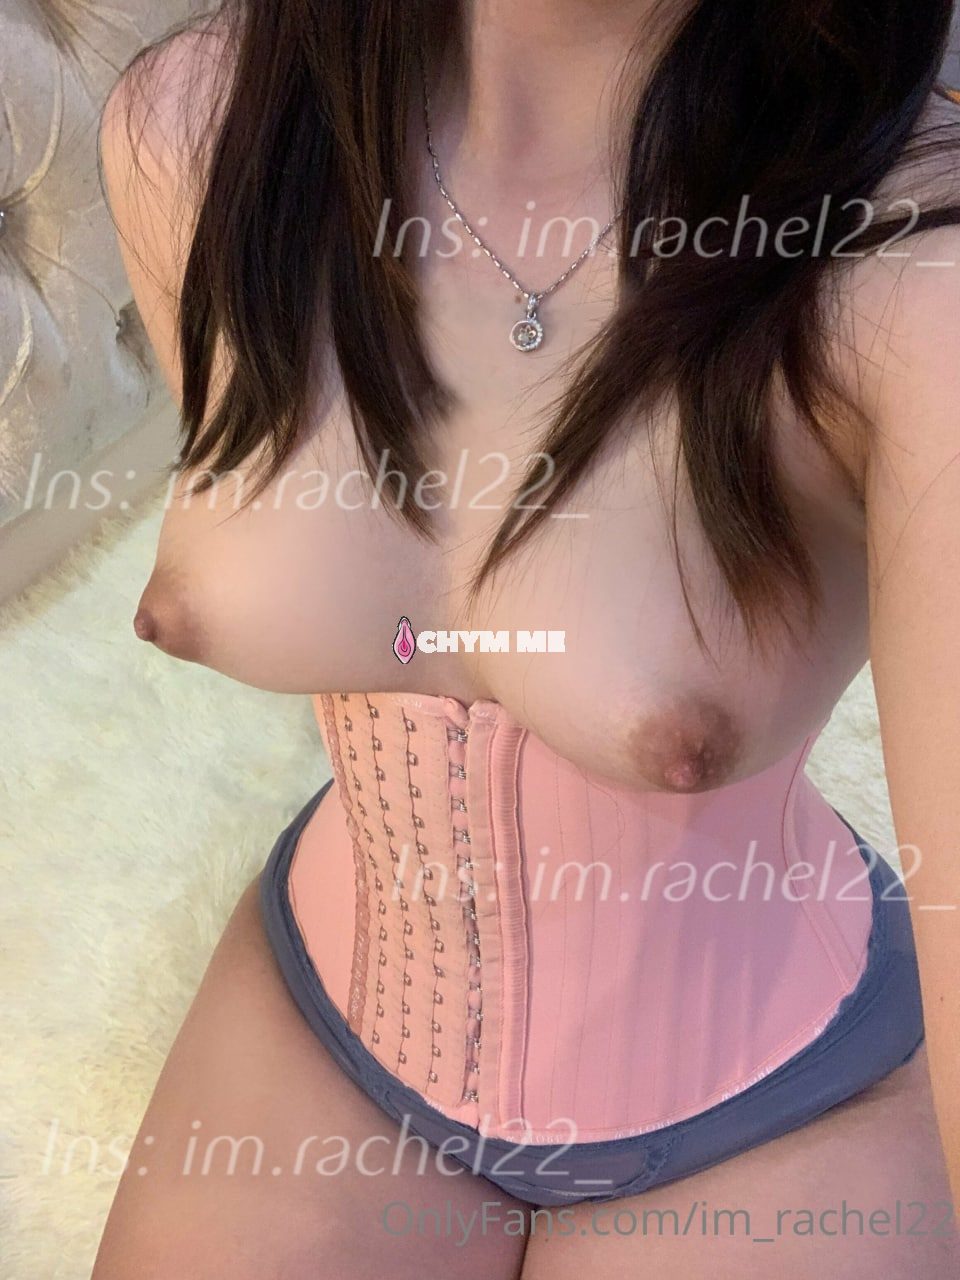 Im_Rachel22 Onlyfans Leak (33 Photo & Video)